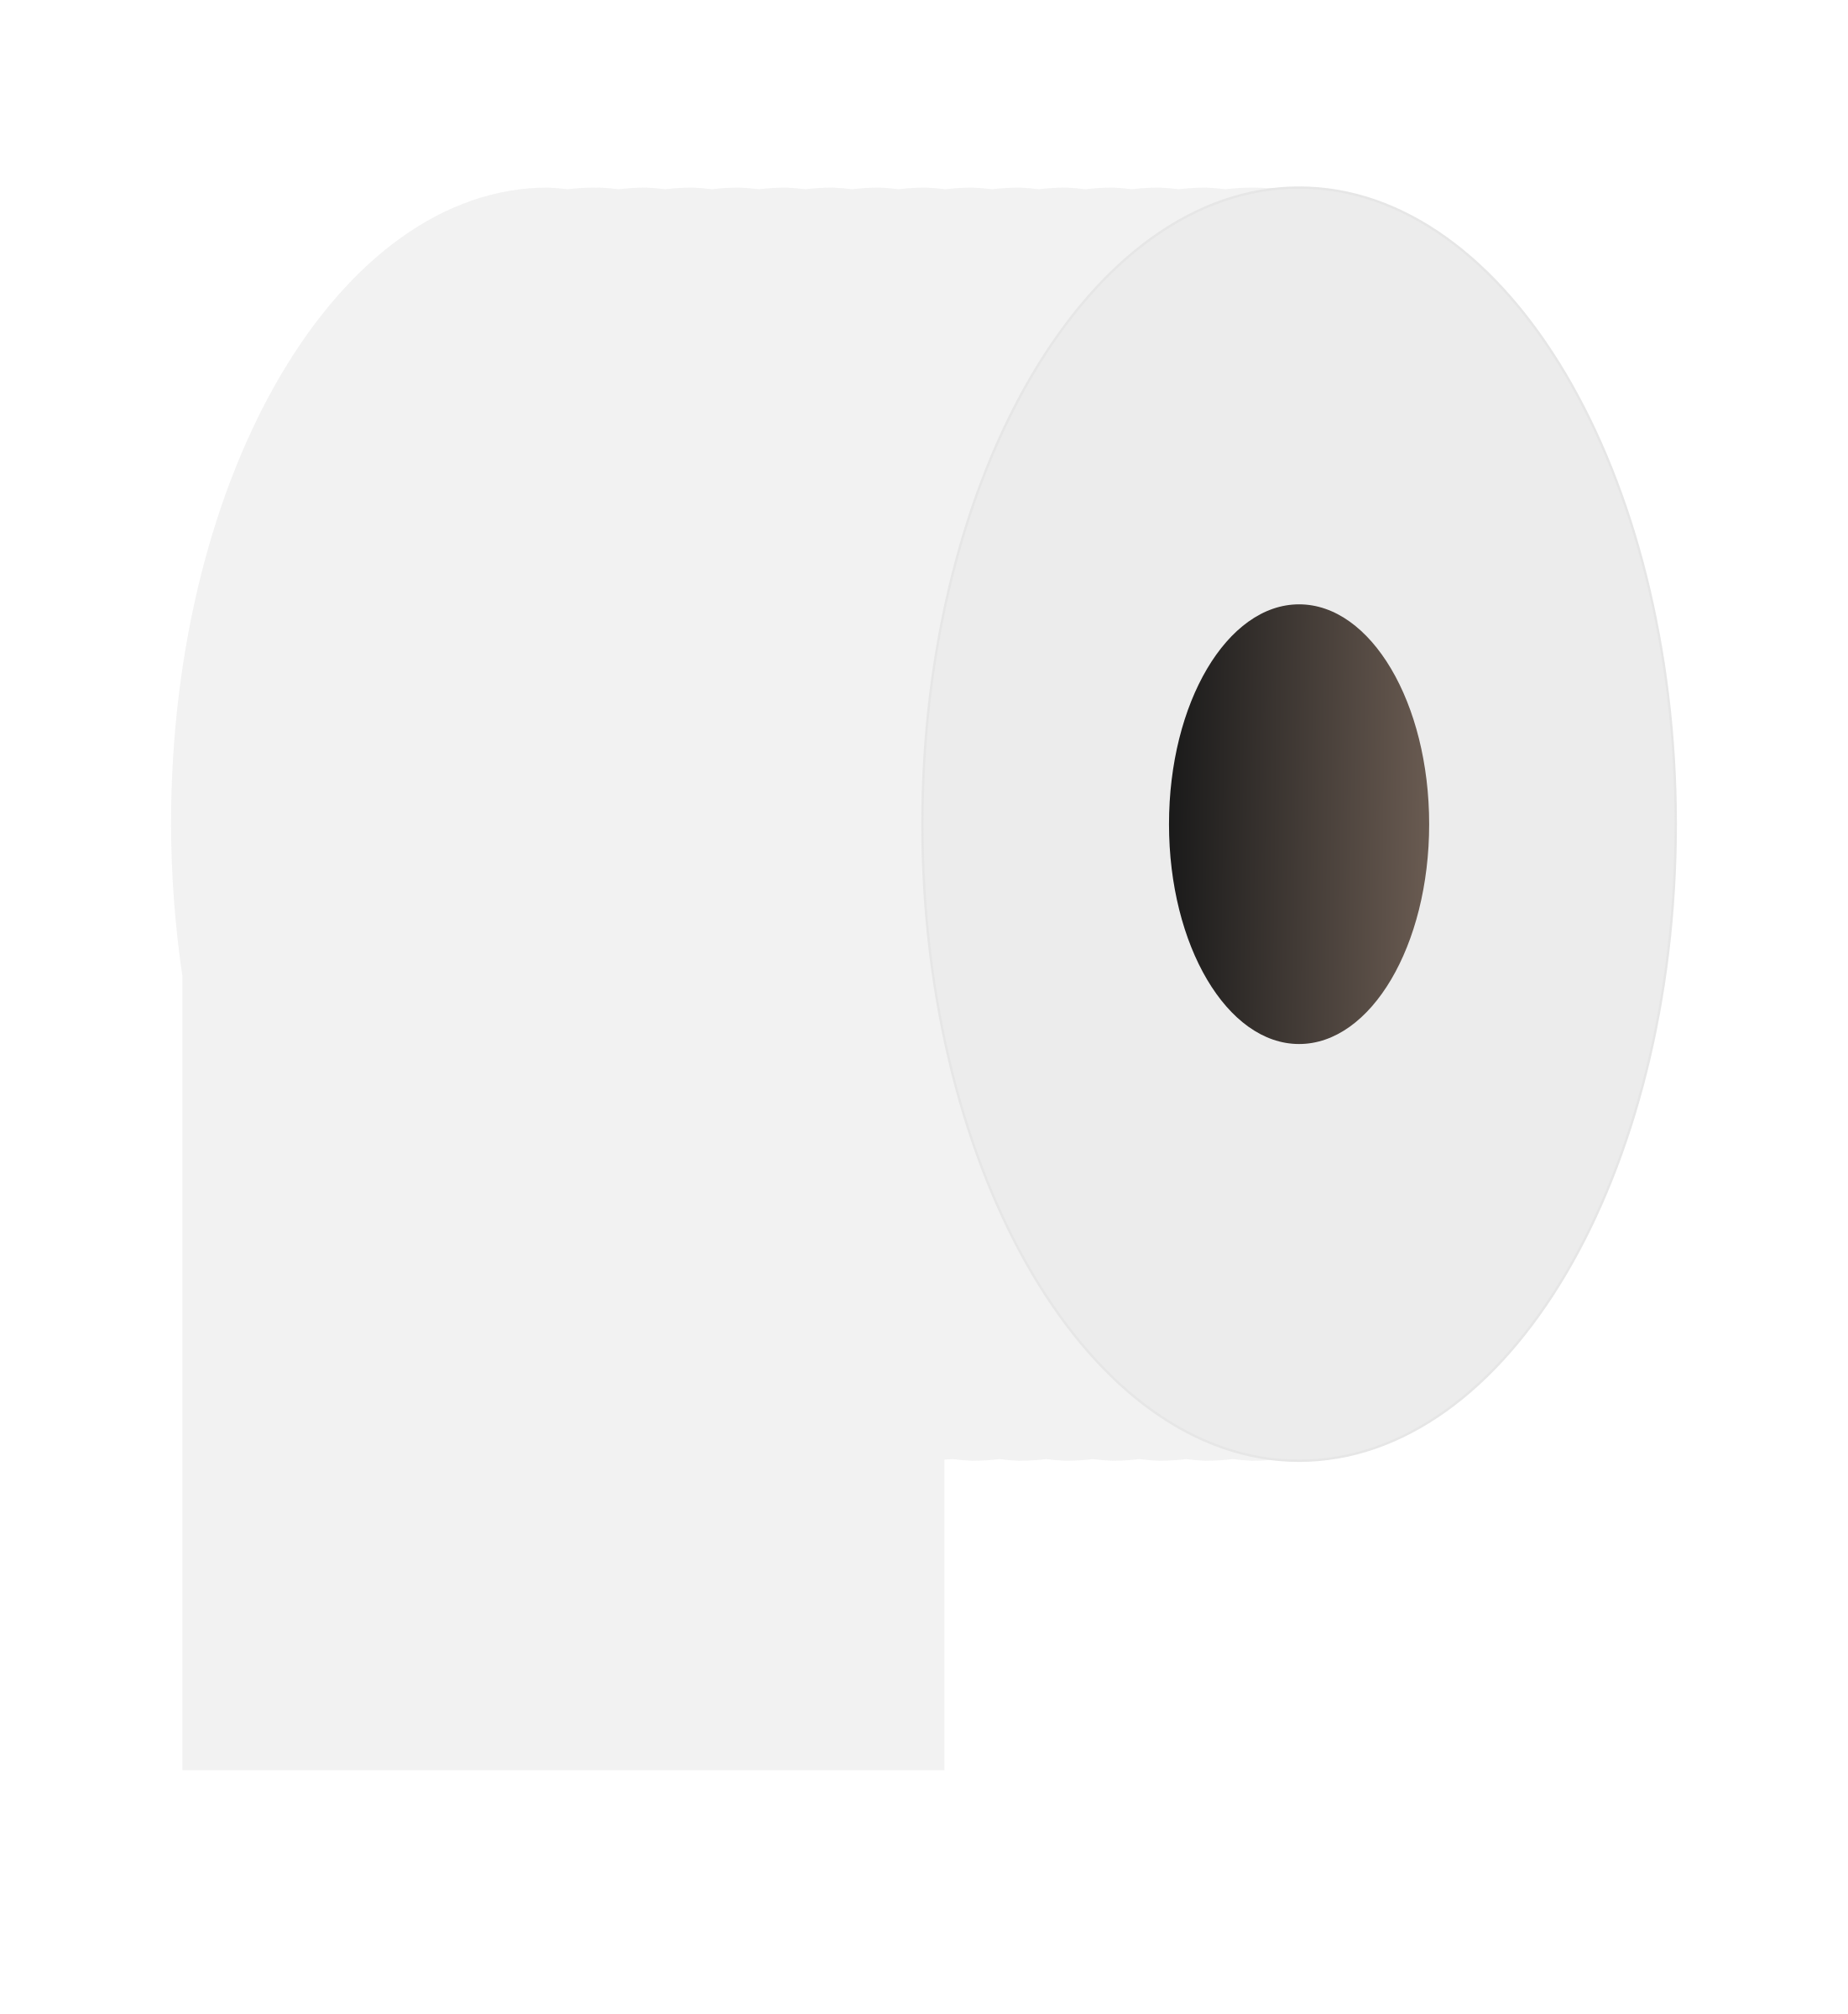 Tuvalet kağıdı